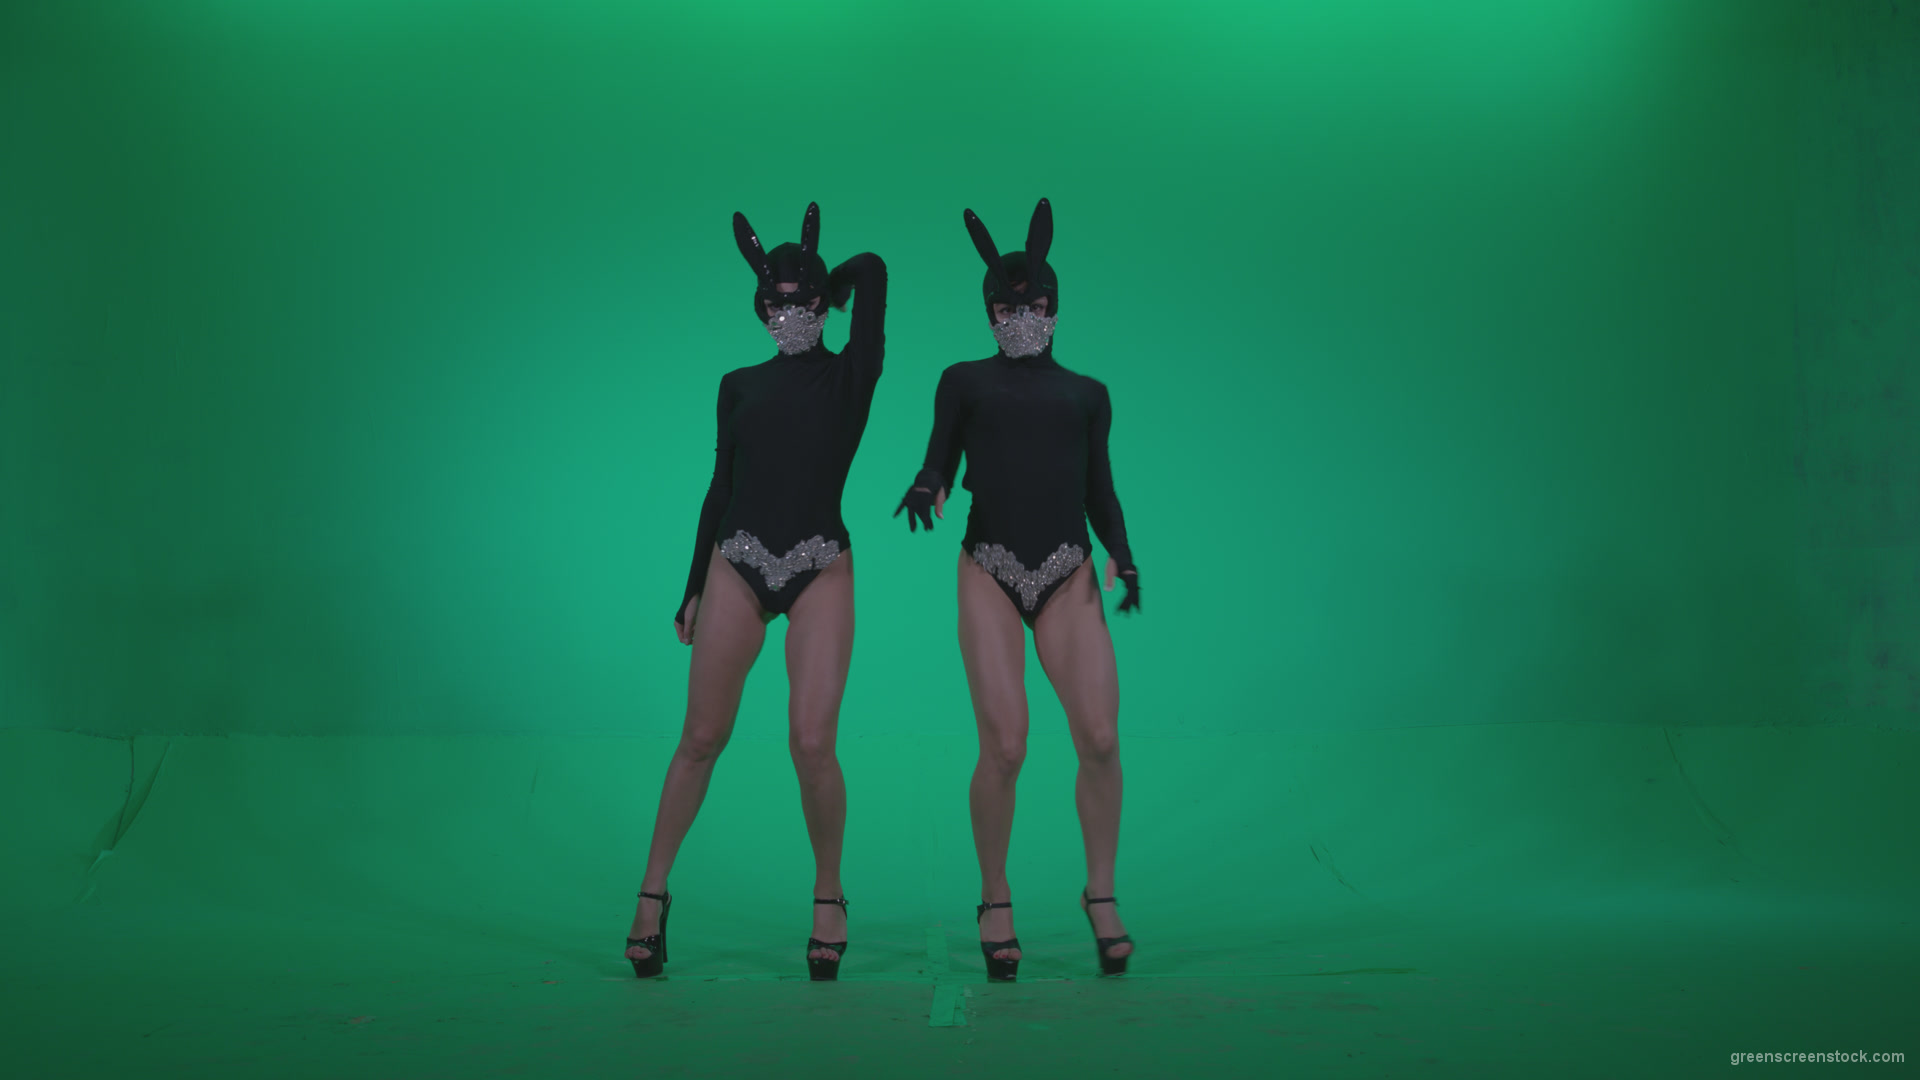 Go-go-Dancer-Black-Rabbit-u1-Green-Screen-Video-Footage_001 Green Screen Stock